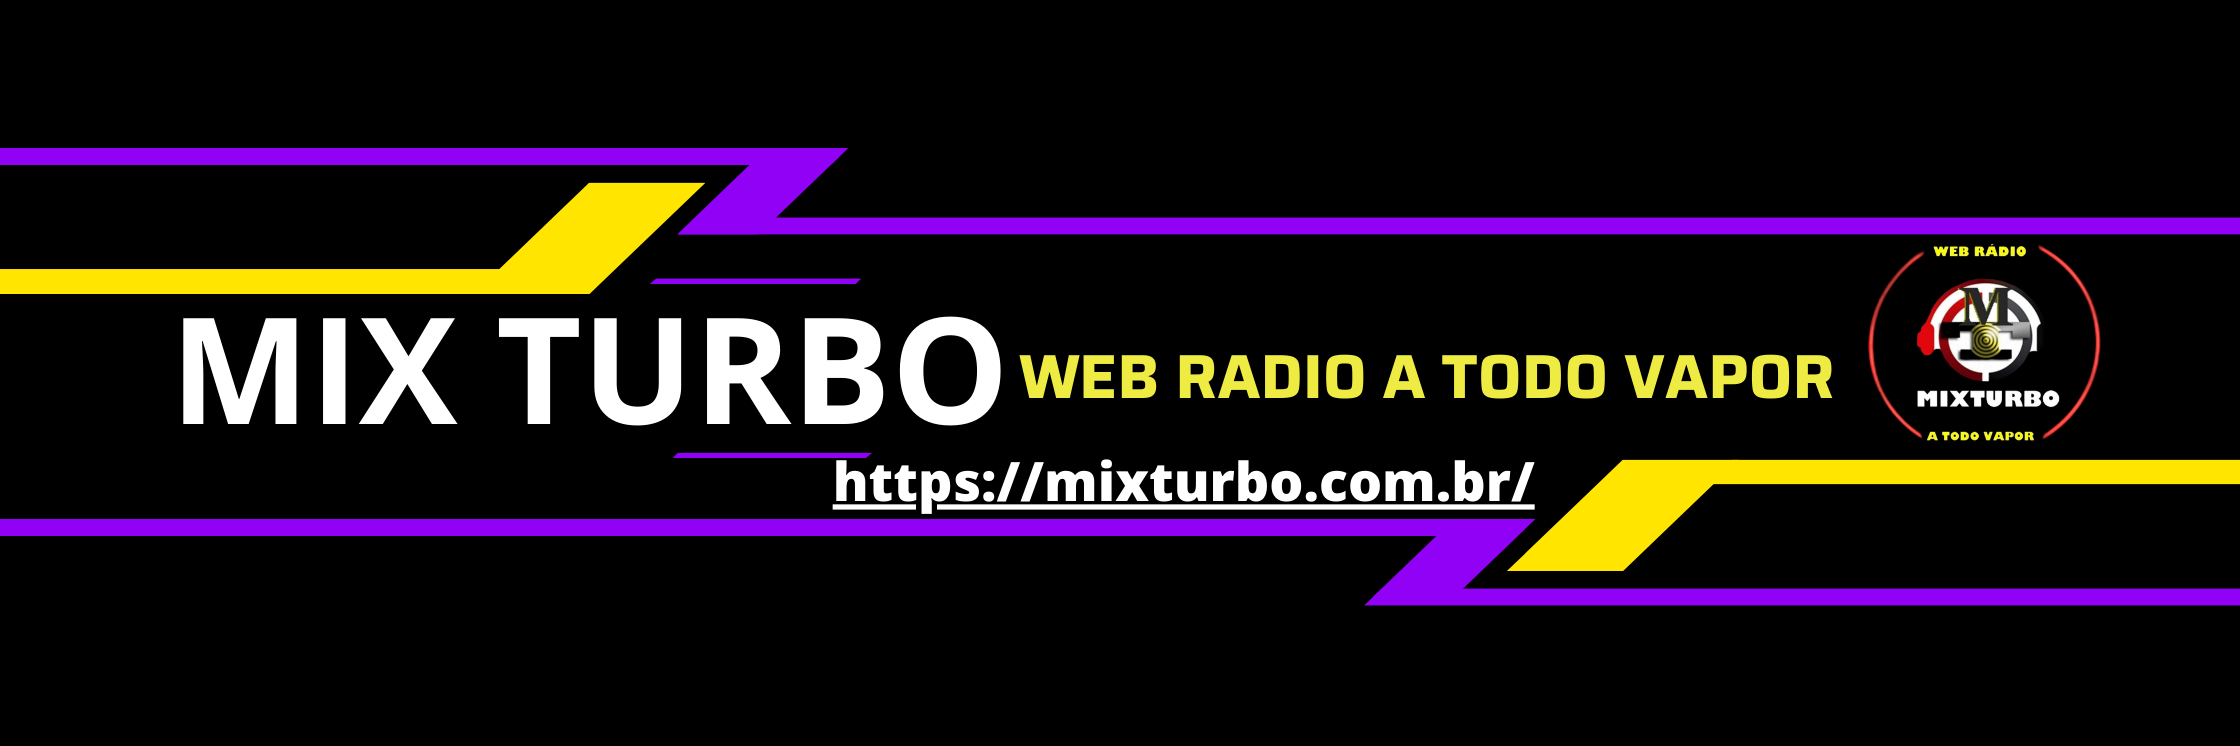 Mix Turbo Web Radio